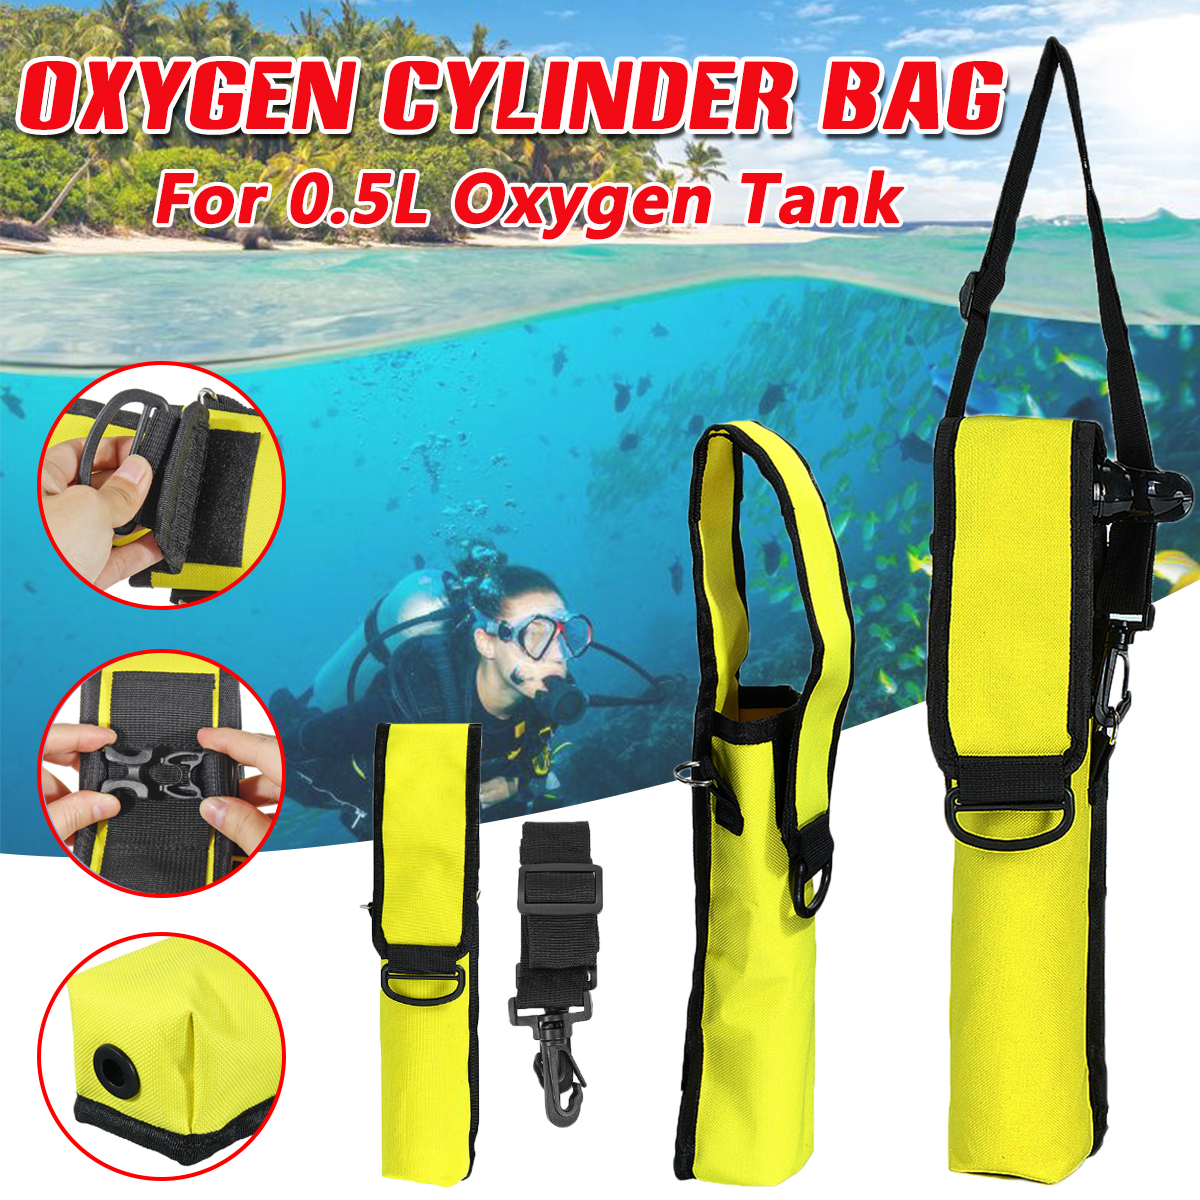 05L-Oxygen-Cylinder-Tank-Bag-Respirator-Bag-Scuba-Diving-Equipment-Bag-1491070-2